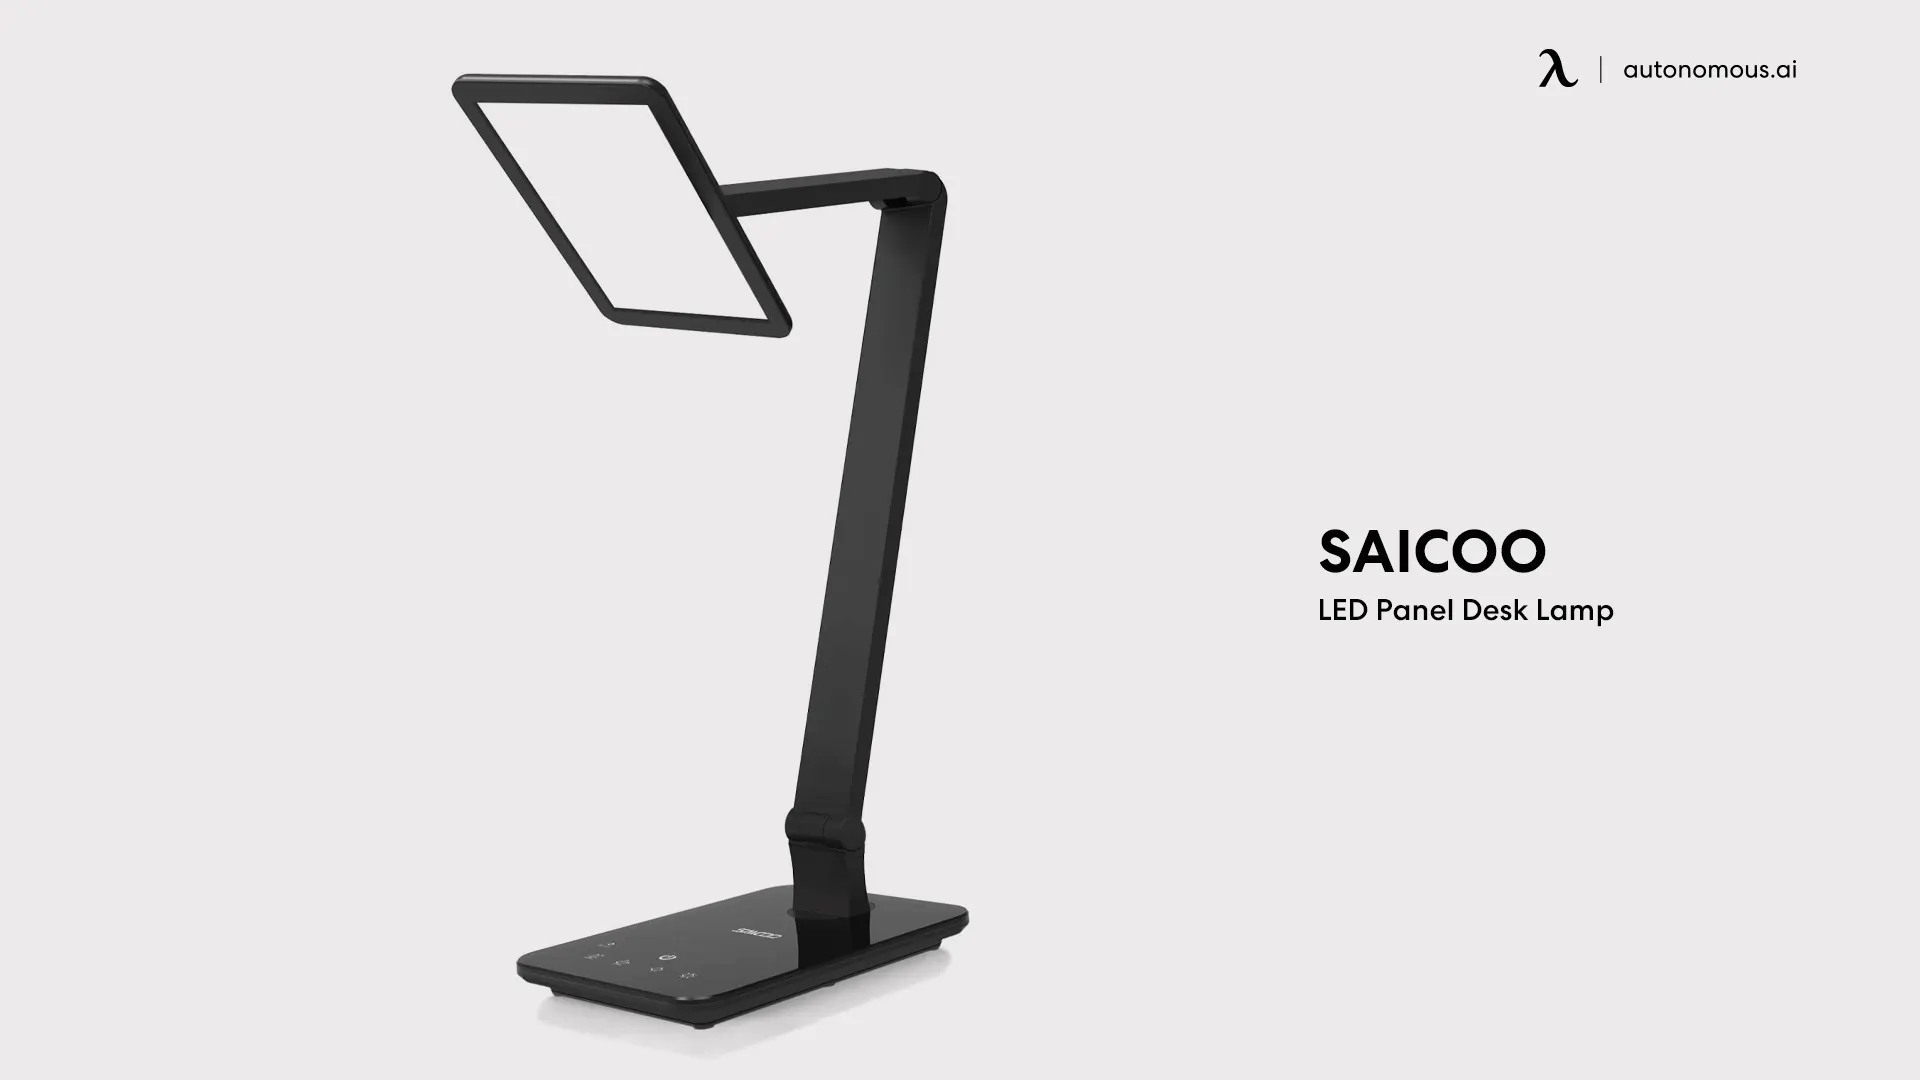 LED Panel Desk Lamp from SAICOO